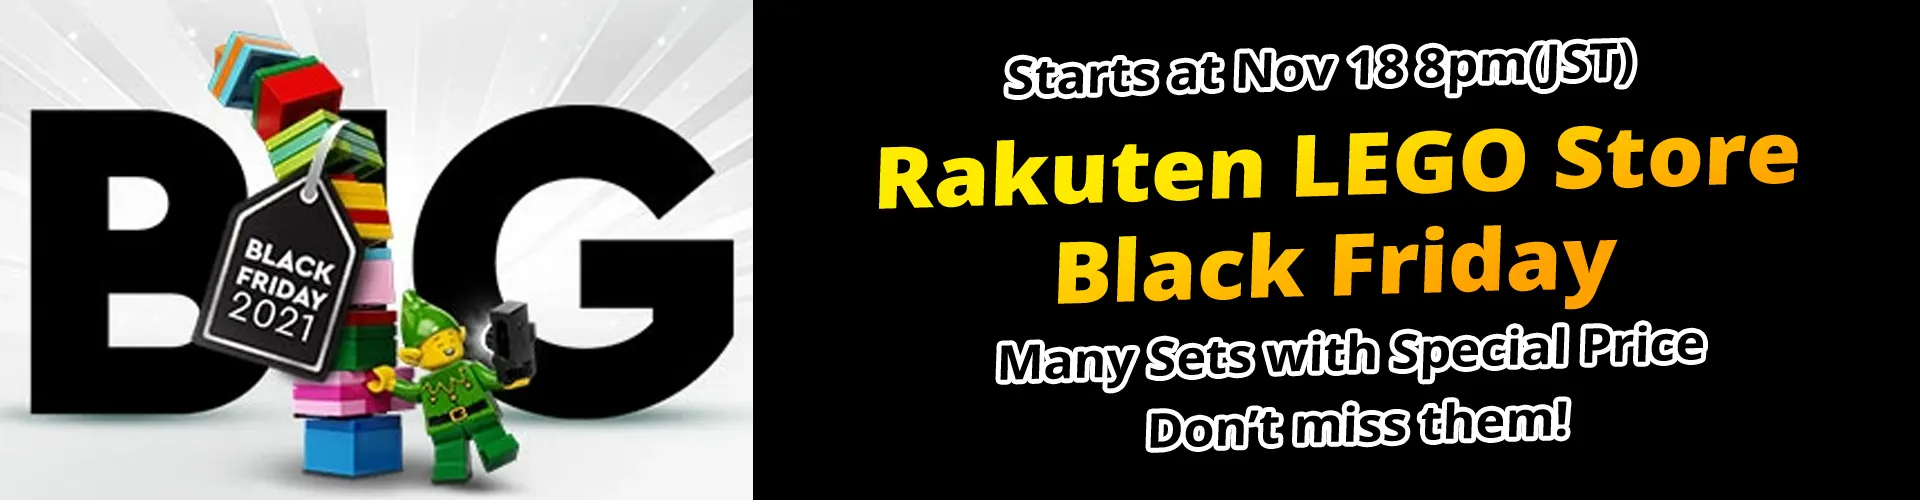 LEGO Black Friday Sale on Rakuten Japan stars at 8pm Nov 18, 2021(JST)